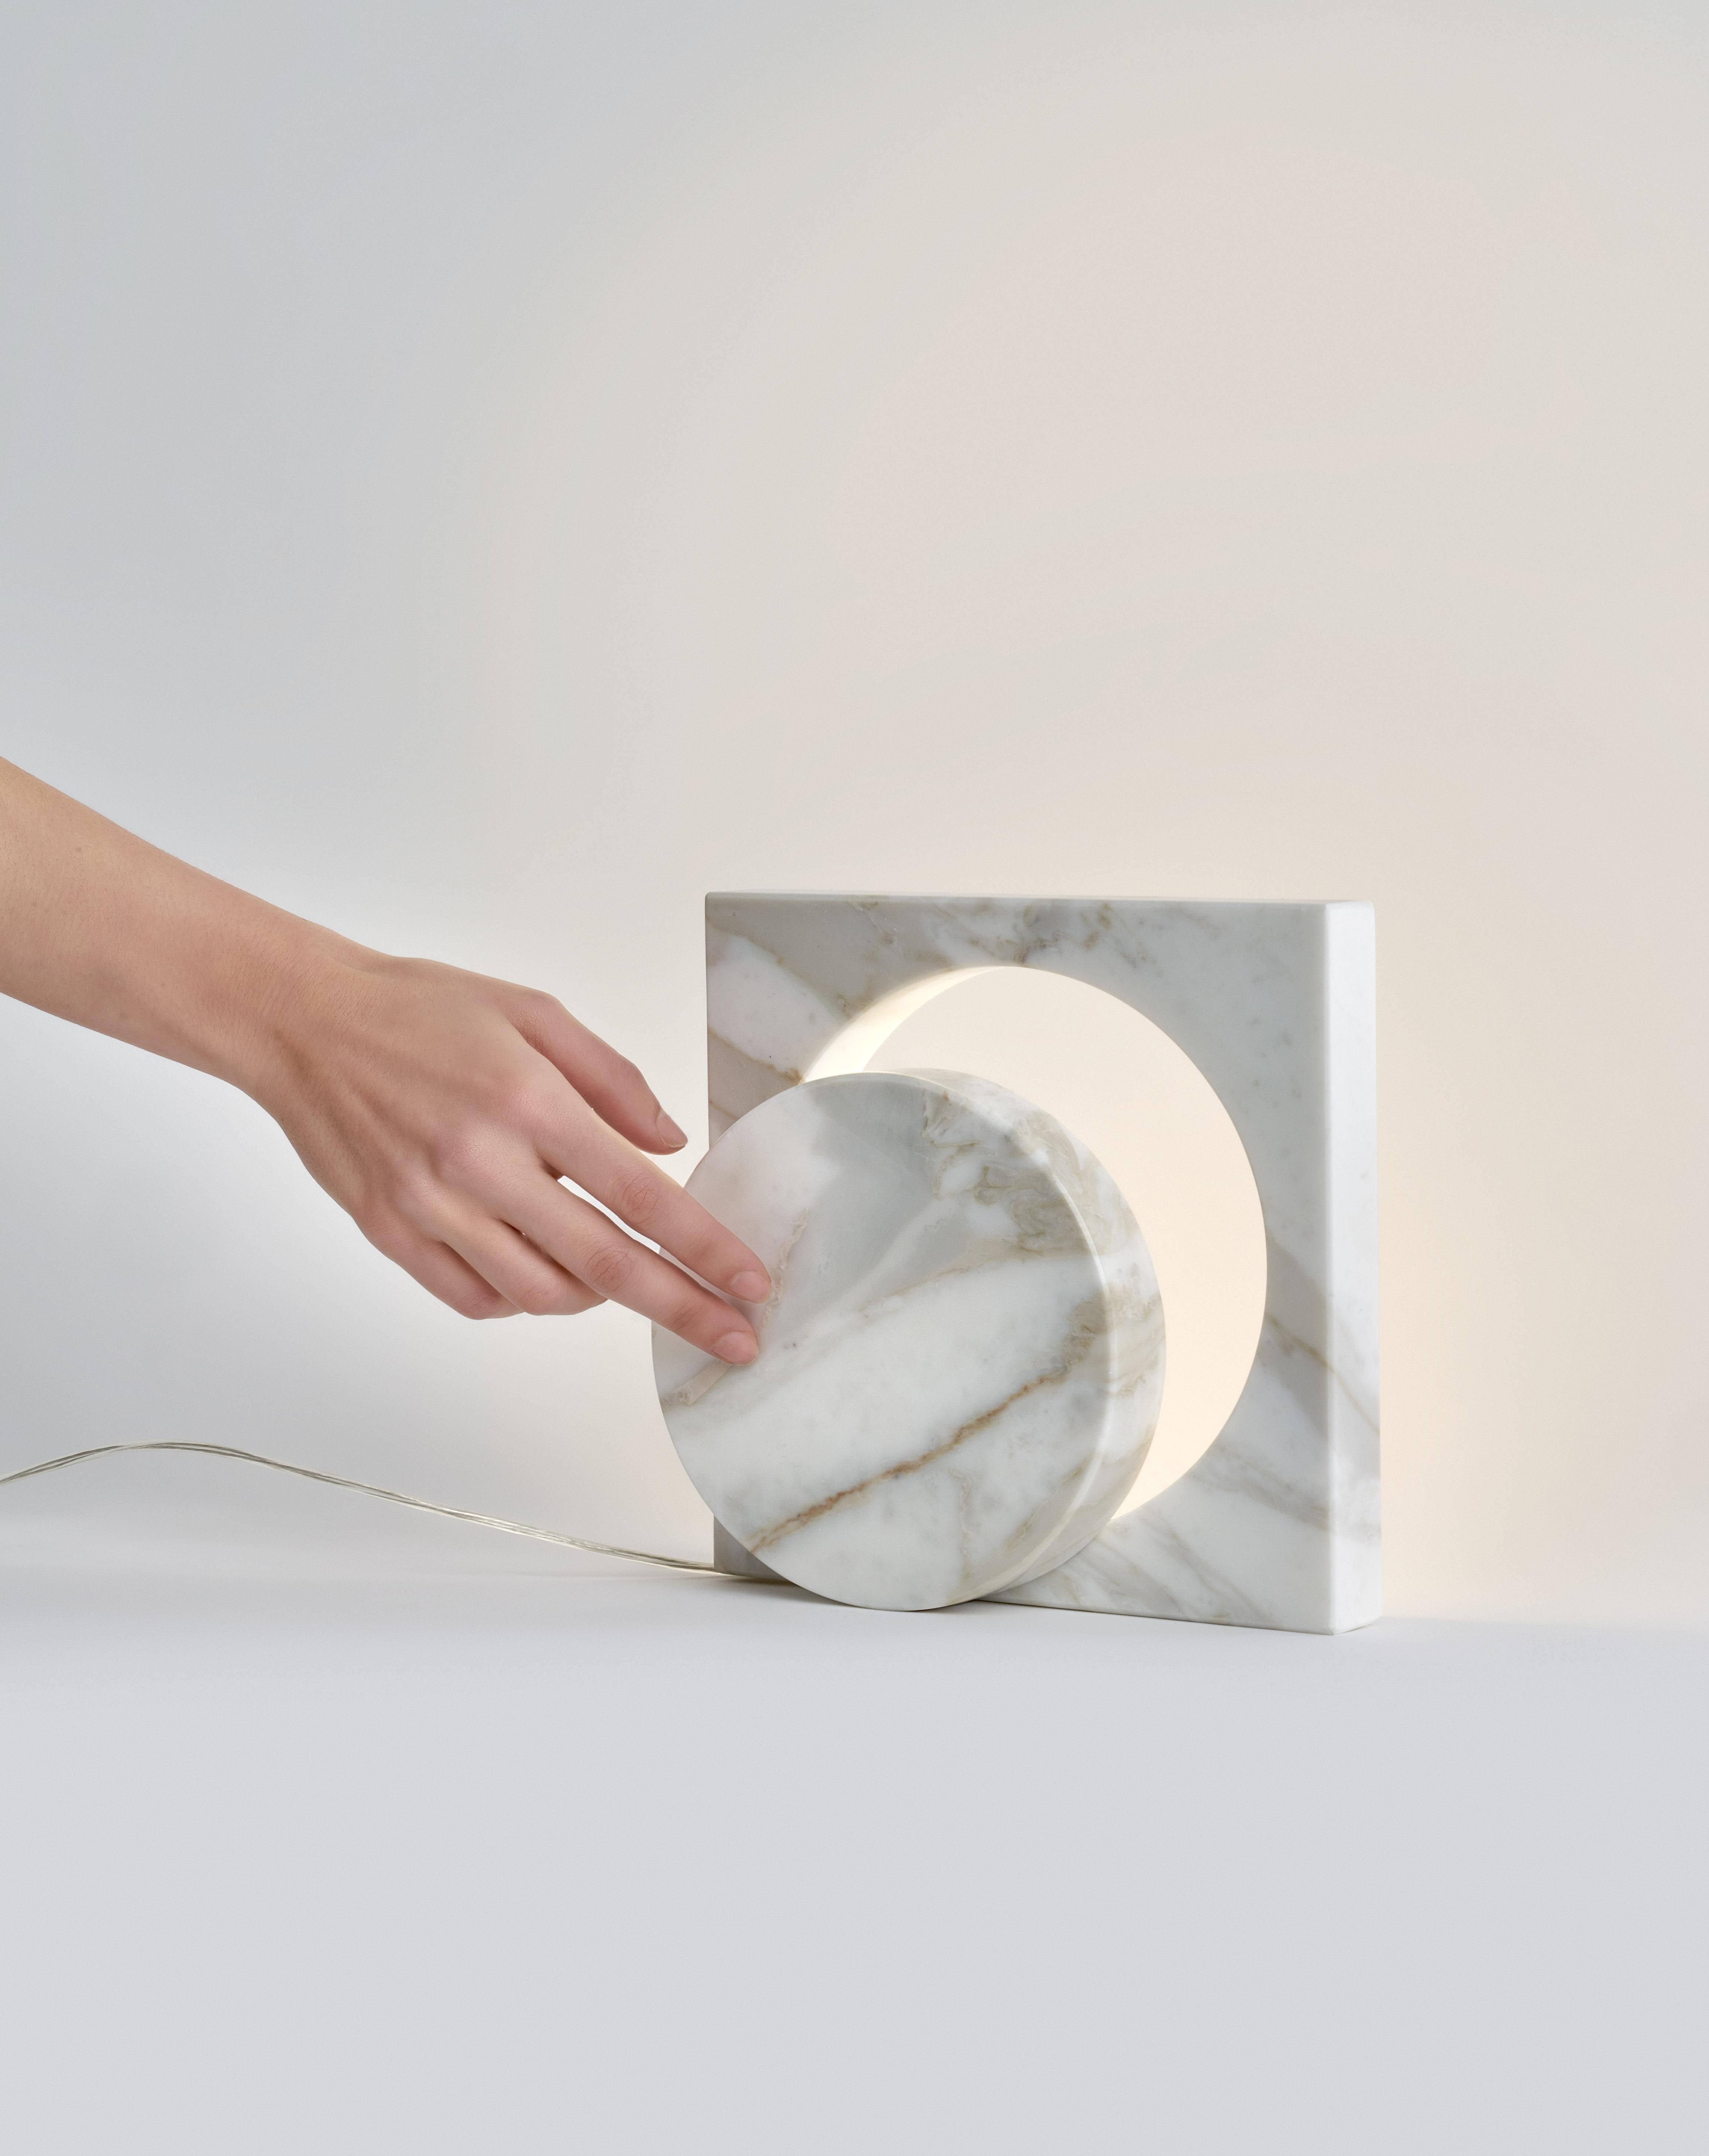 Italian Marble One Cut Moon Table Lamp, Moreno Ratti